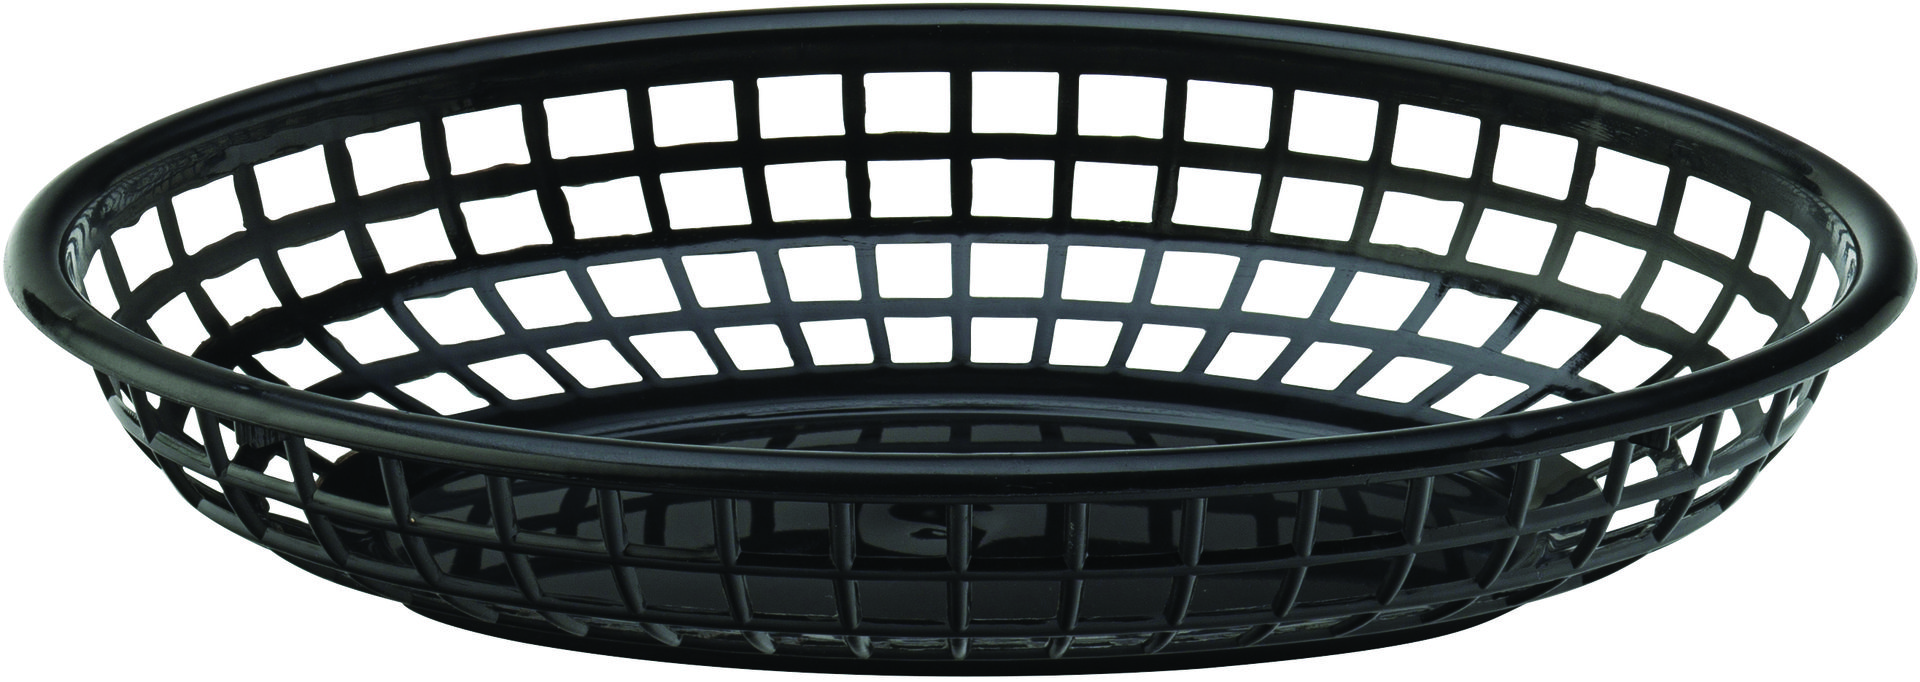 Black Oval Basket 9 x 6